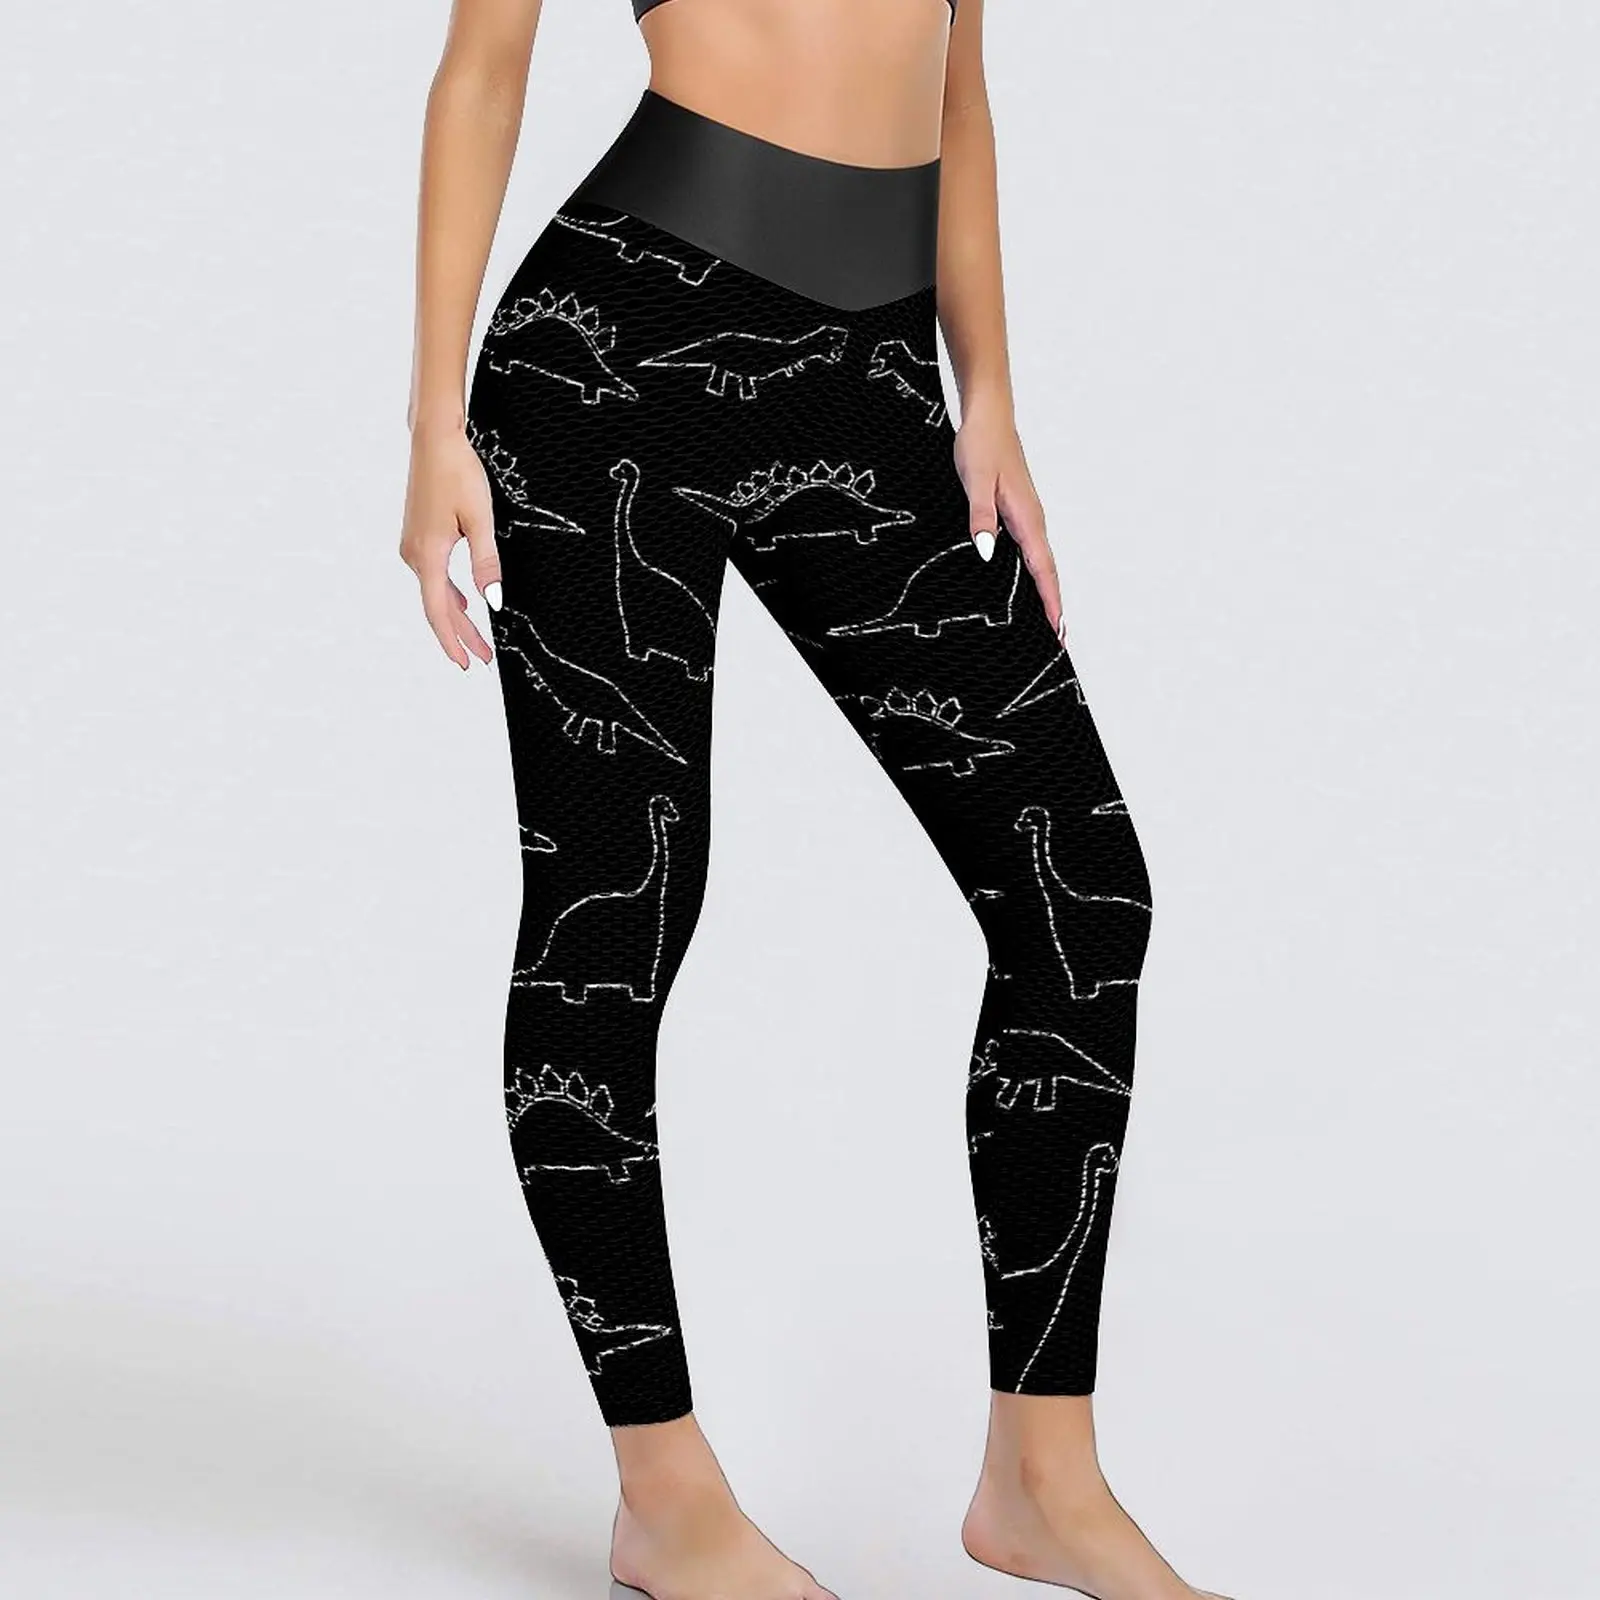 I Love Dinosaur Yoga Pants Women Cute Animal Print Leggings Sexy Push Up Elegant Yoga Sports Tights Design Workout Gym Leggins